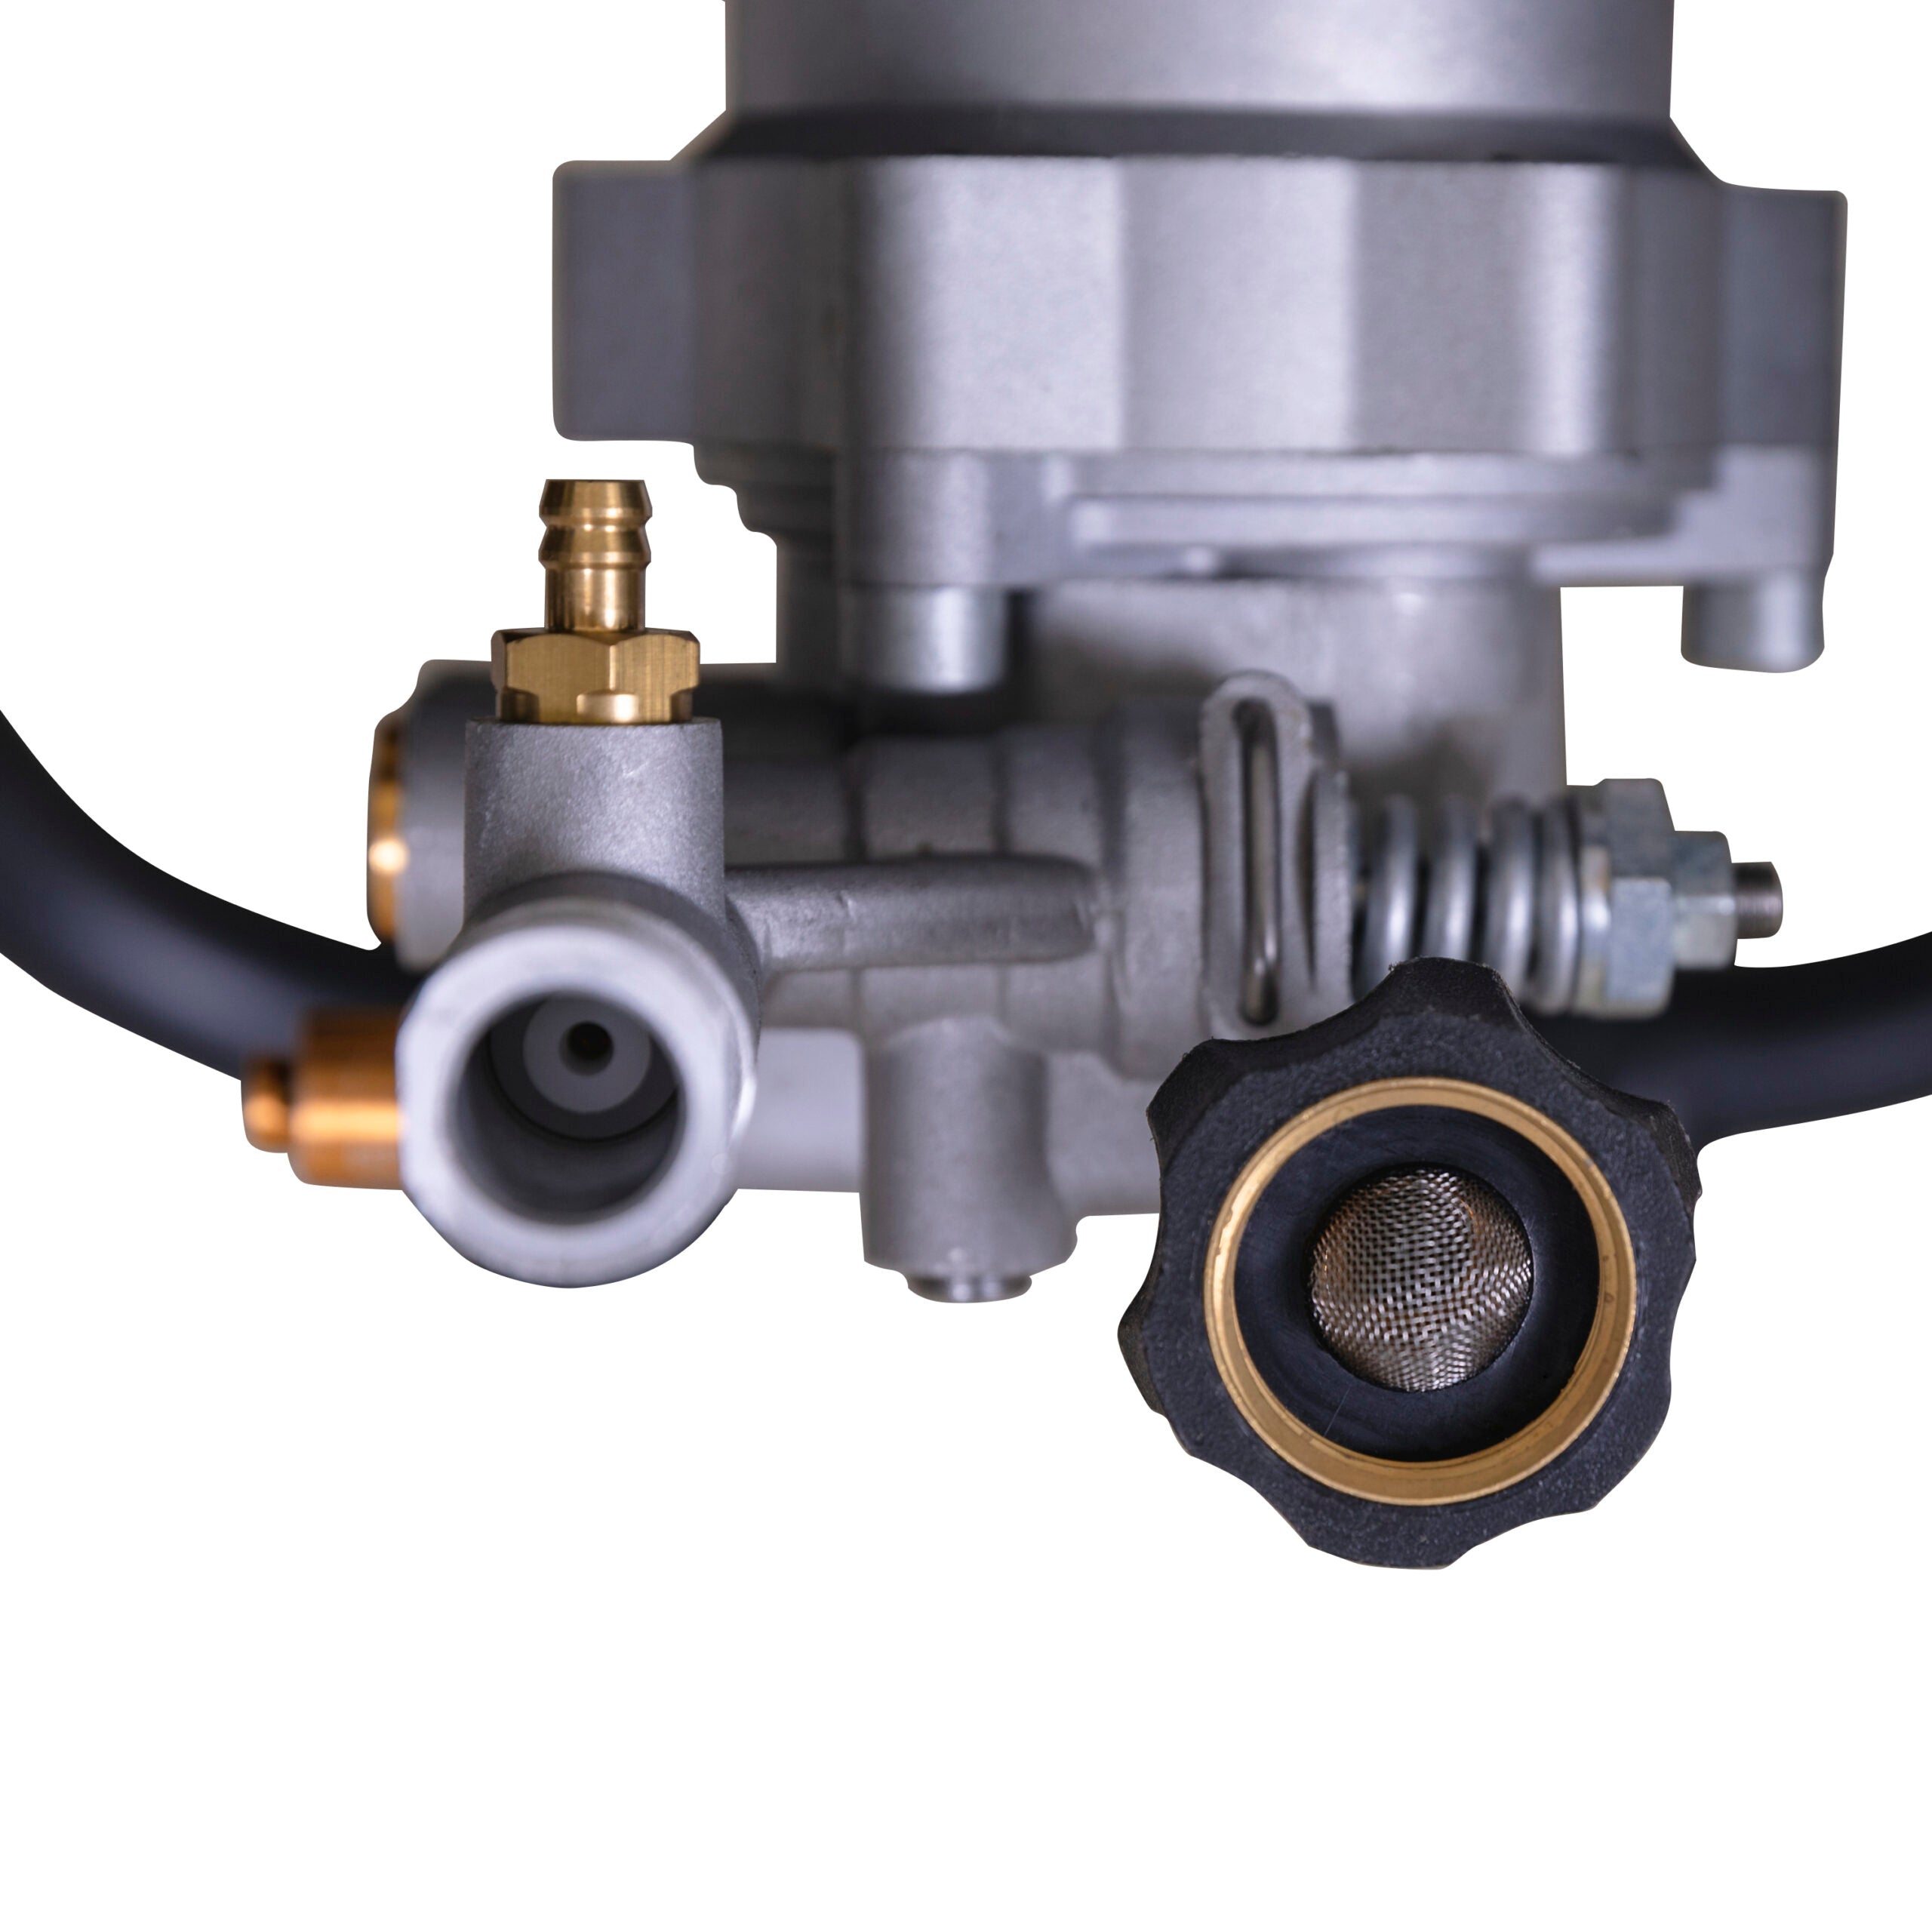 Simpson MS61224 MegaShot Cold Water Honda GCV200 Gas Engine Pressure Washer - 3300 PSI - 2.4 GPM Axial Pump